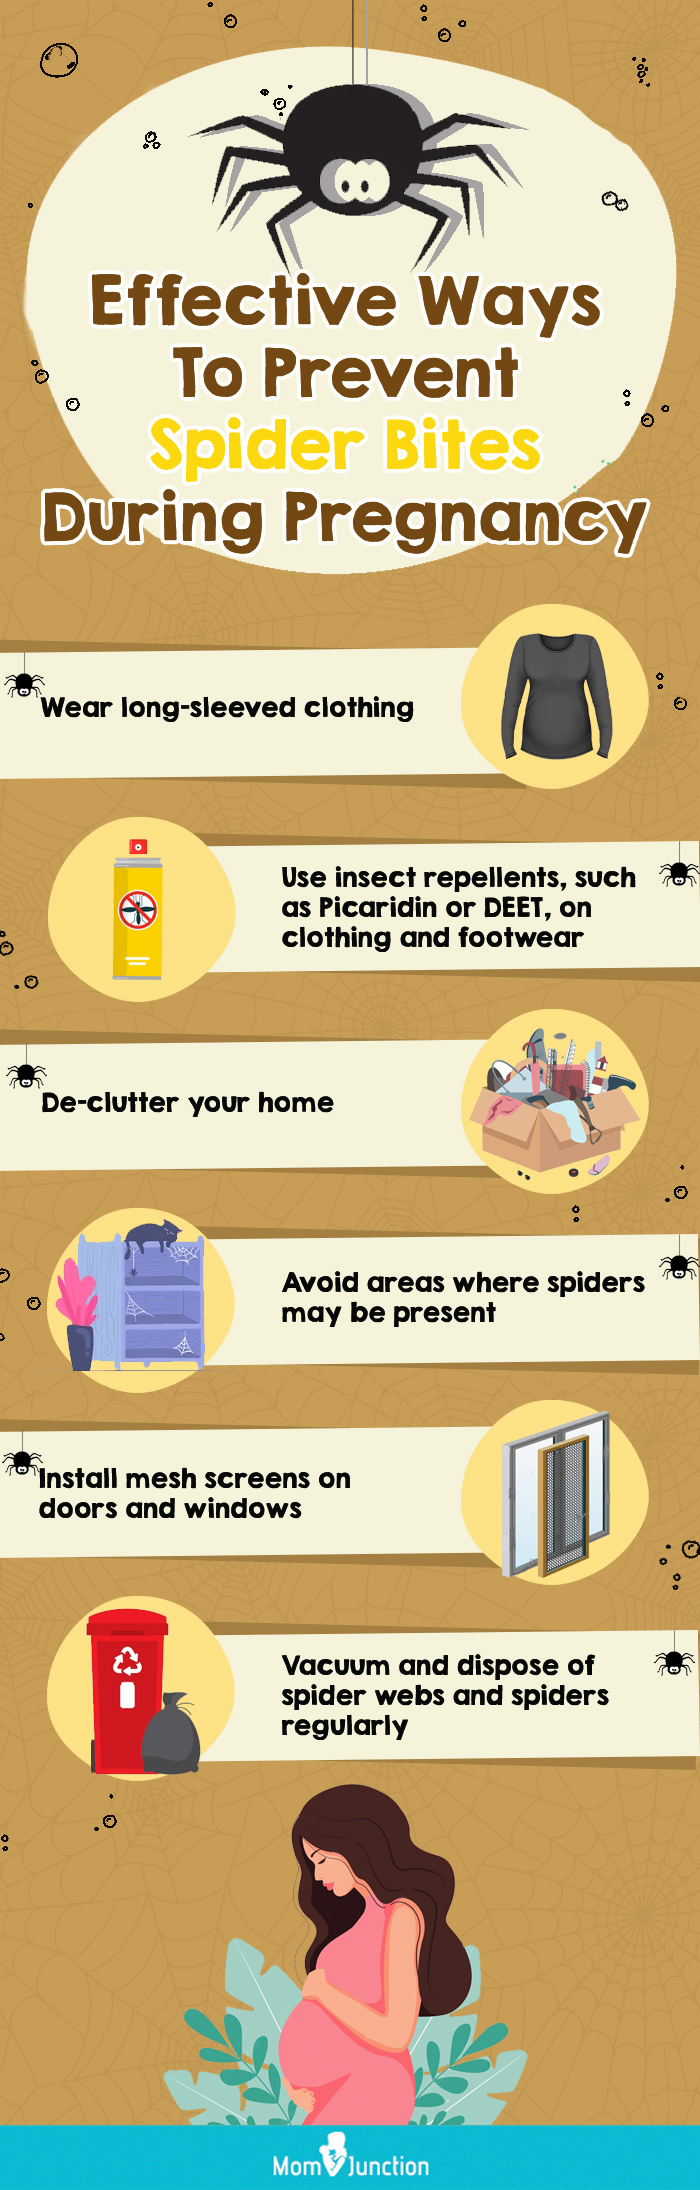 effective ways to prevent spider bites during pregnancy (infographic)